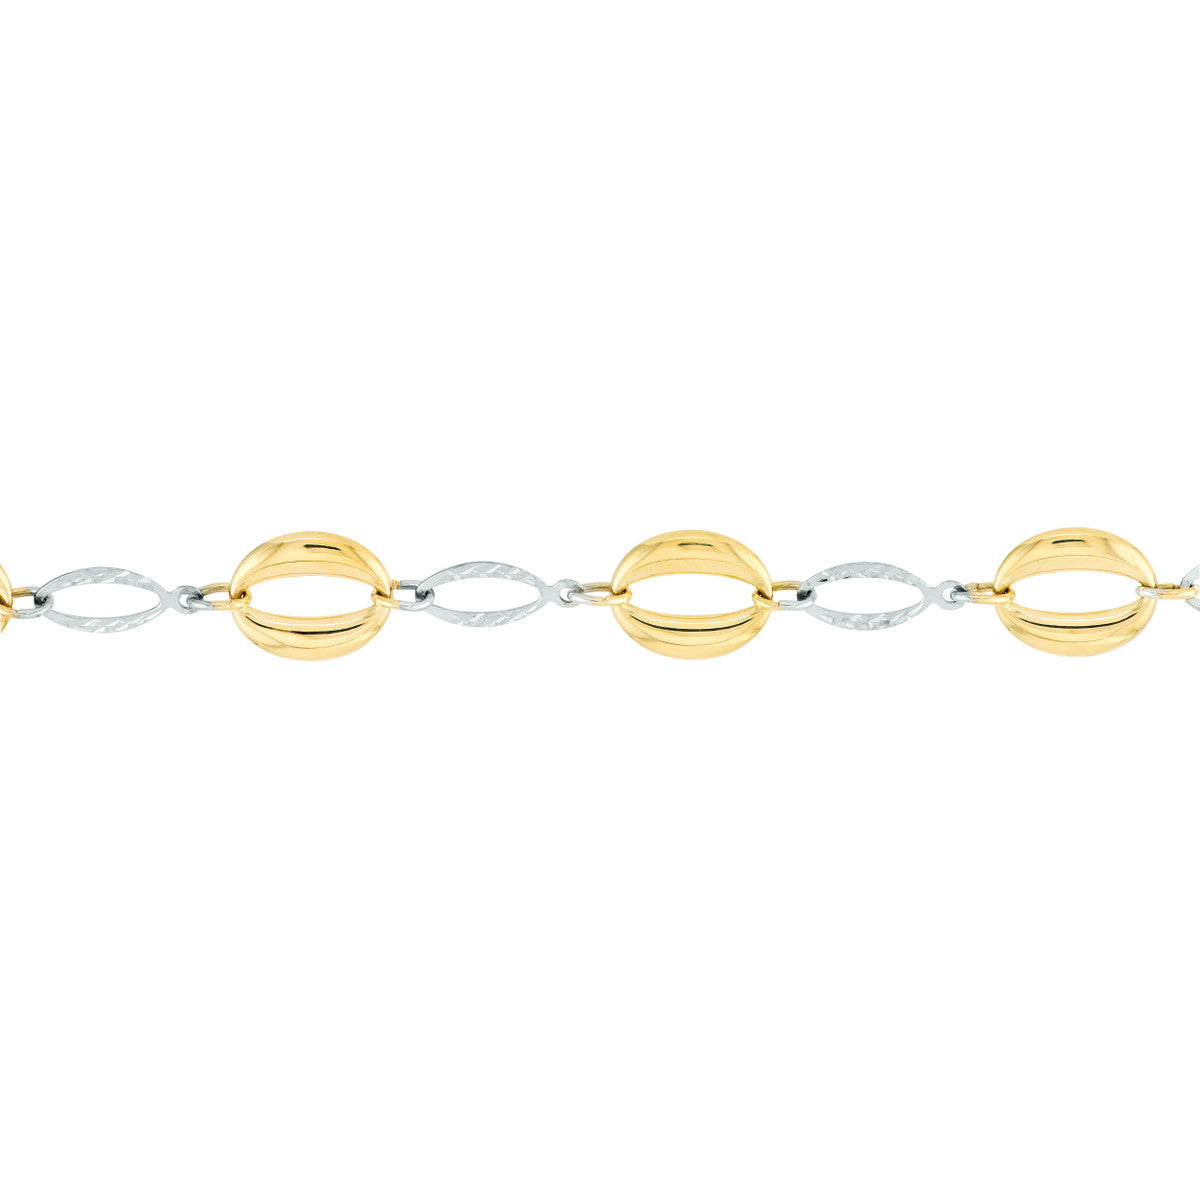 Two-Tone Puffed and Diamond-Cut Oval Link Bracelet